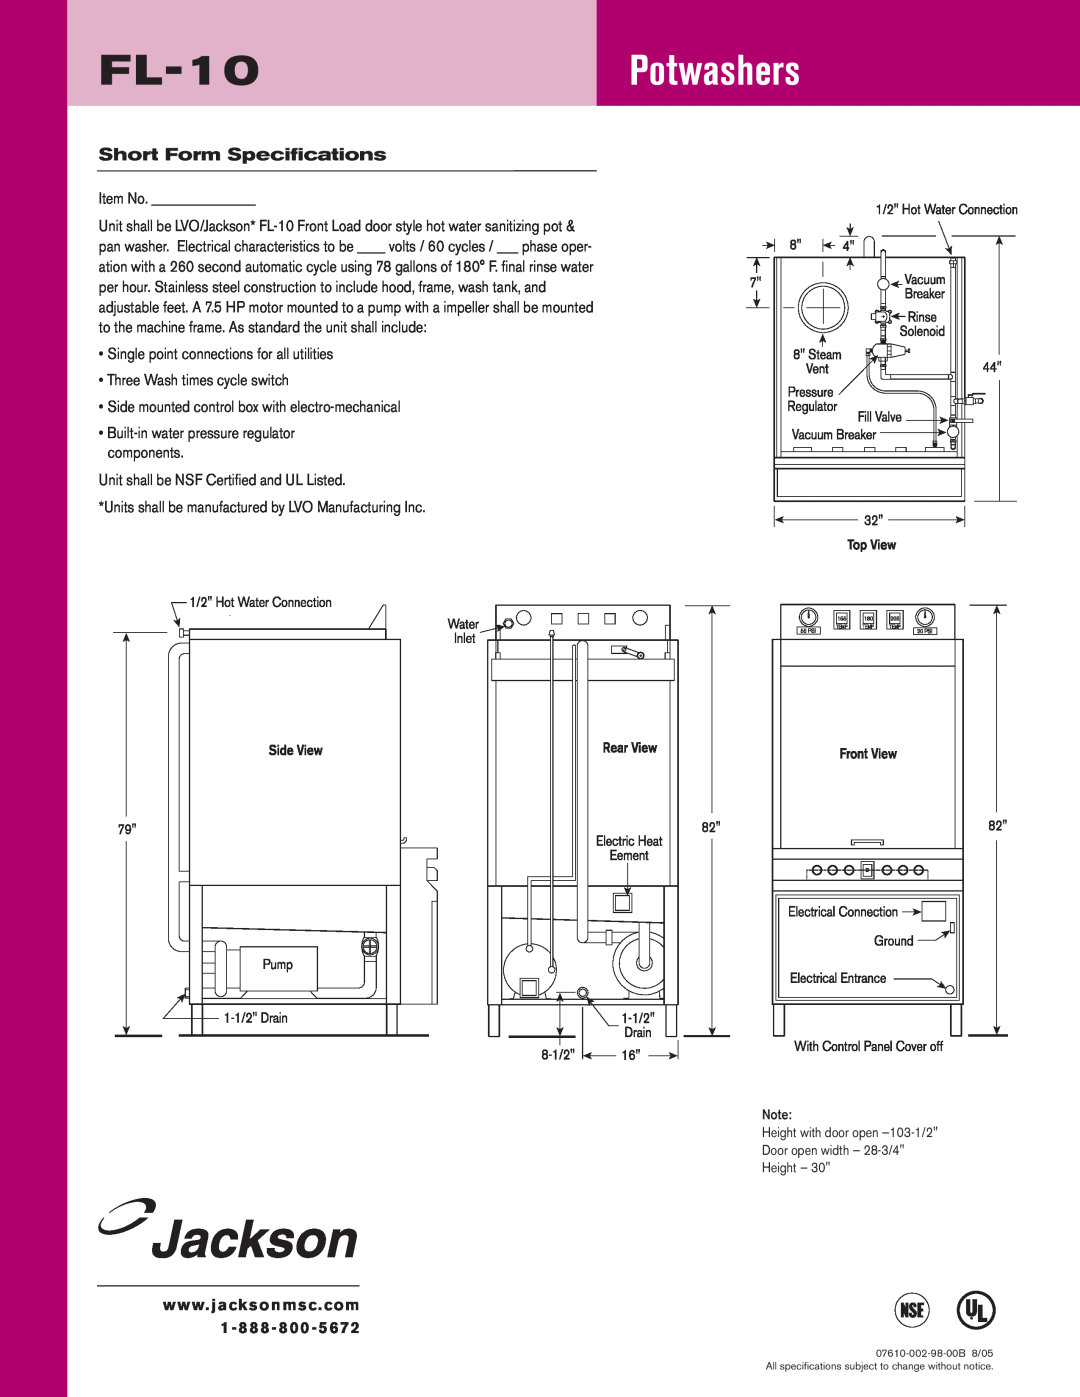 Jackson dimensions Short Form Specifications, FL-10Potwashers 